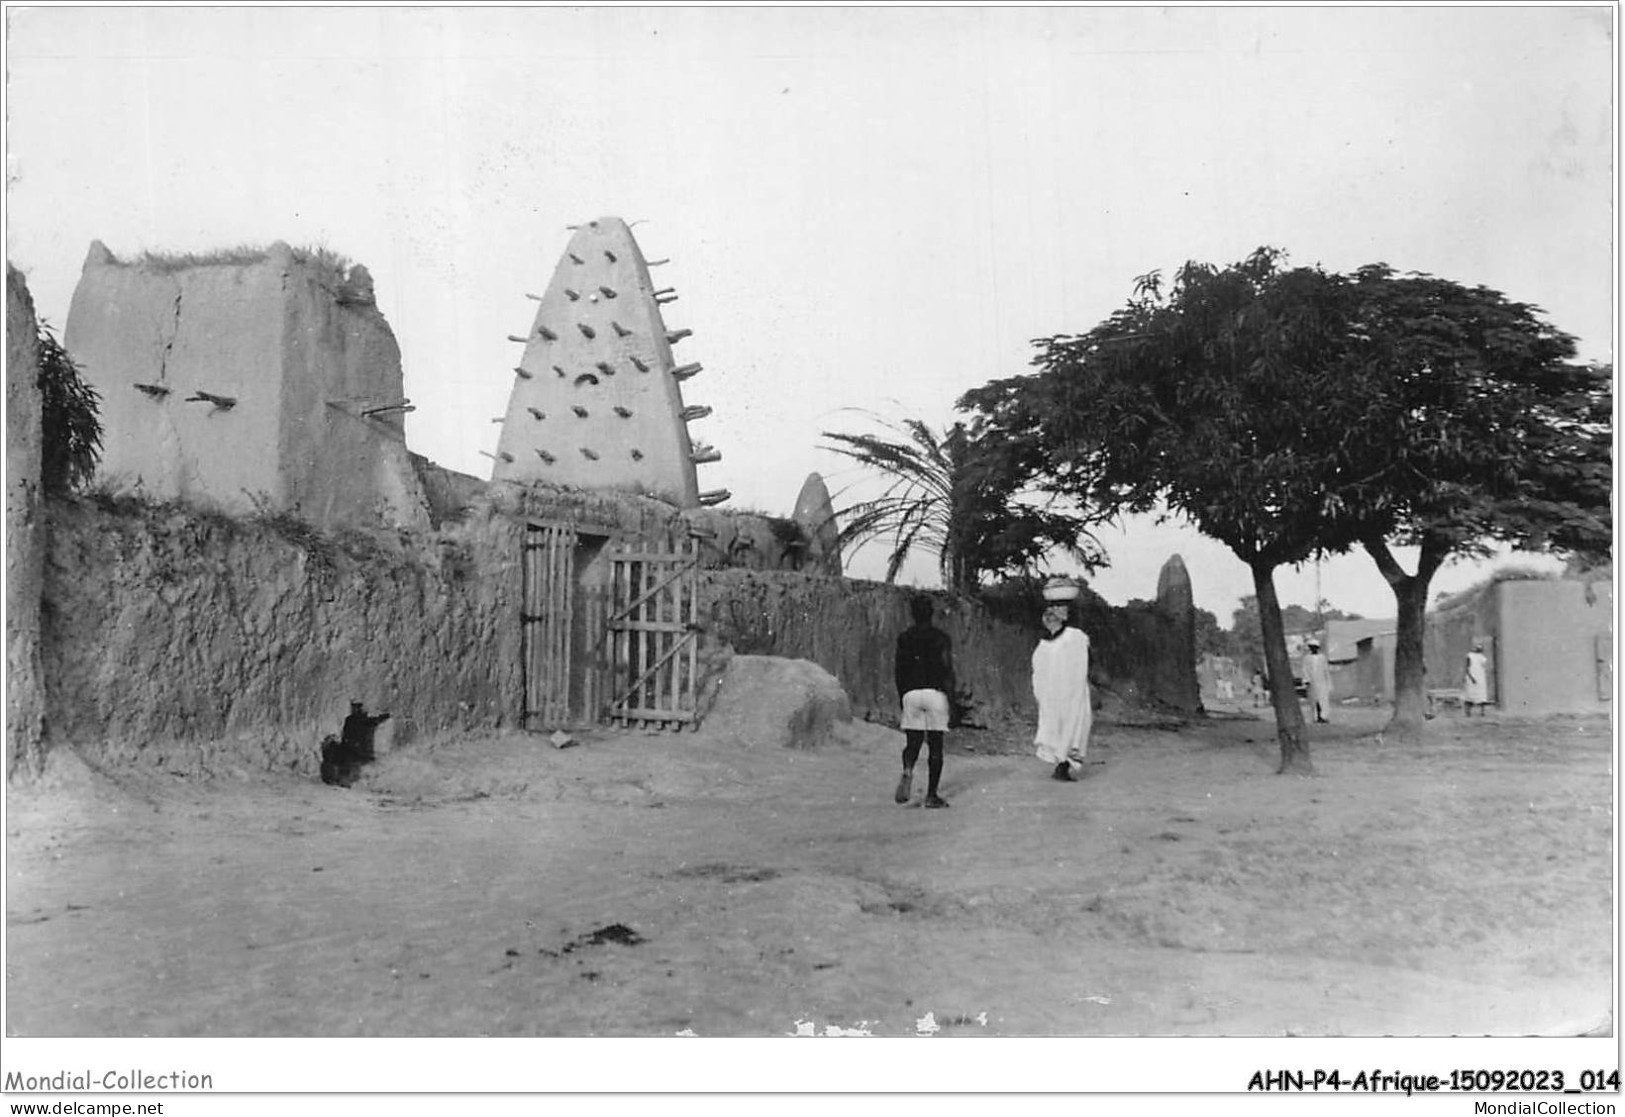 AHNP4-0398 - AFRIQUE - BAMAKO - SOUDAN - Mali